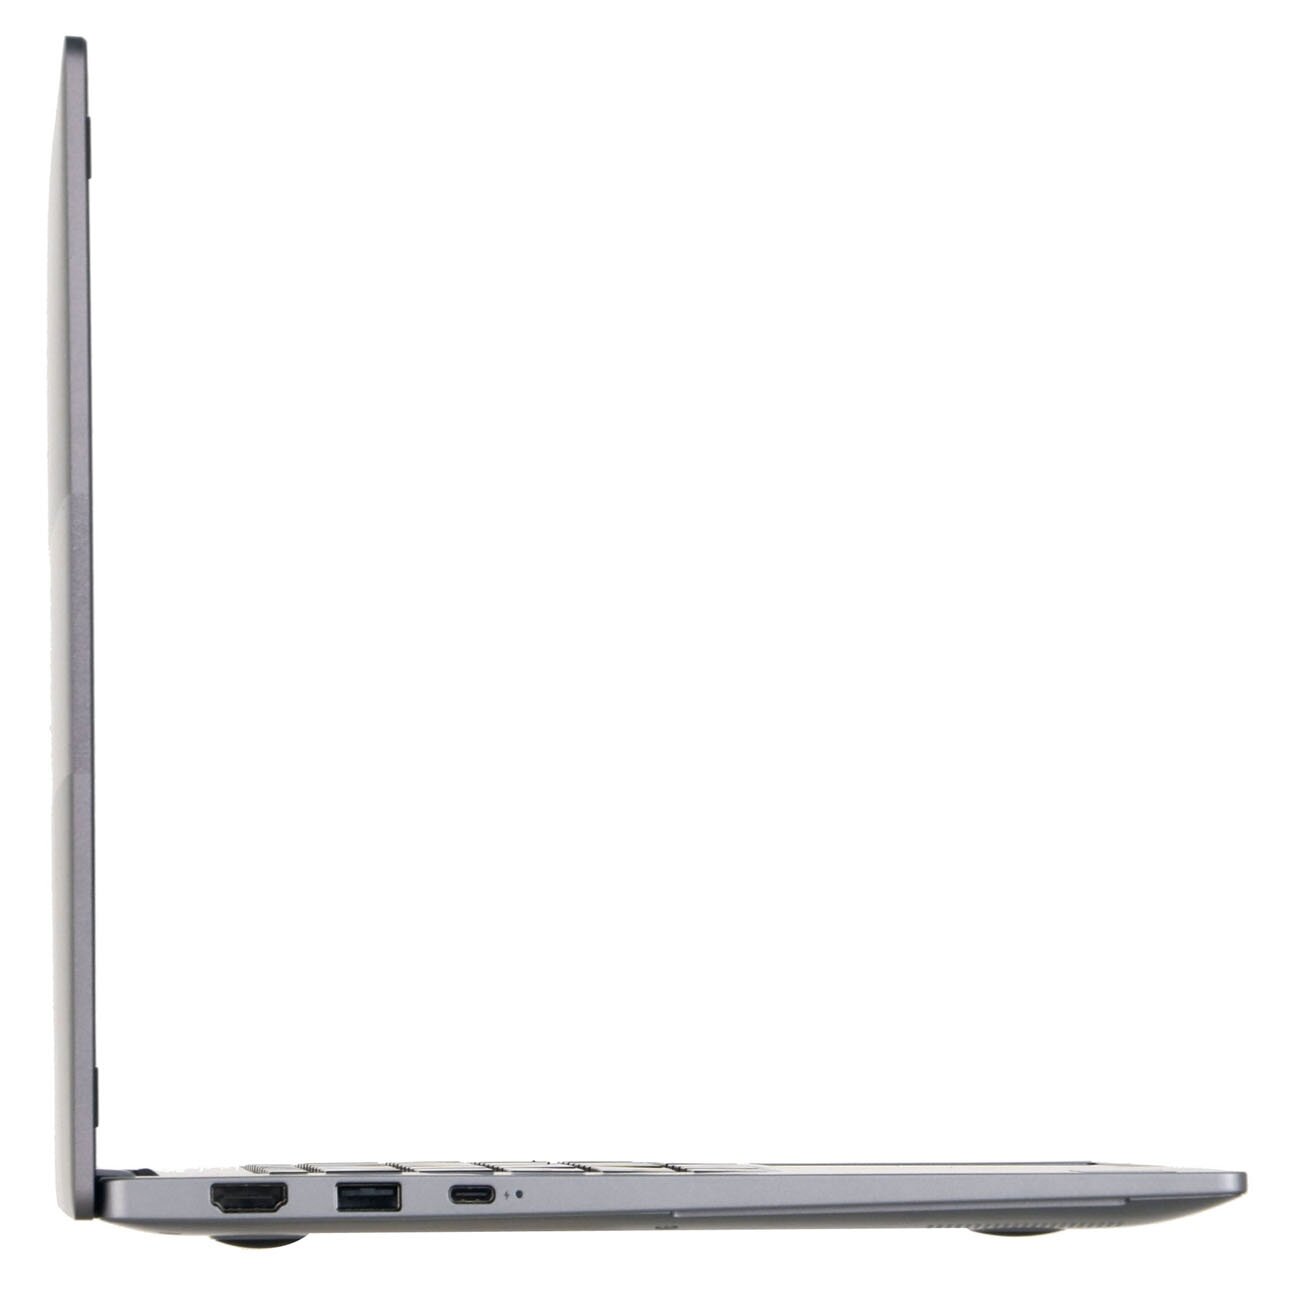 Ноутбук Infinix Inbook Y2 PLUS XL29 i3/16GB/512GB Grey